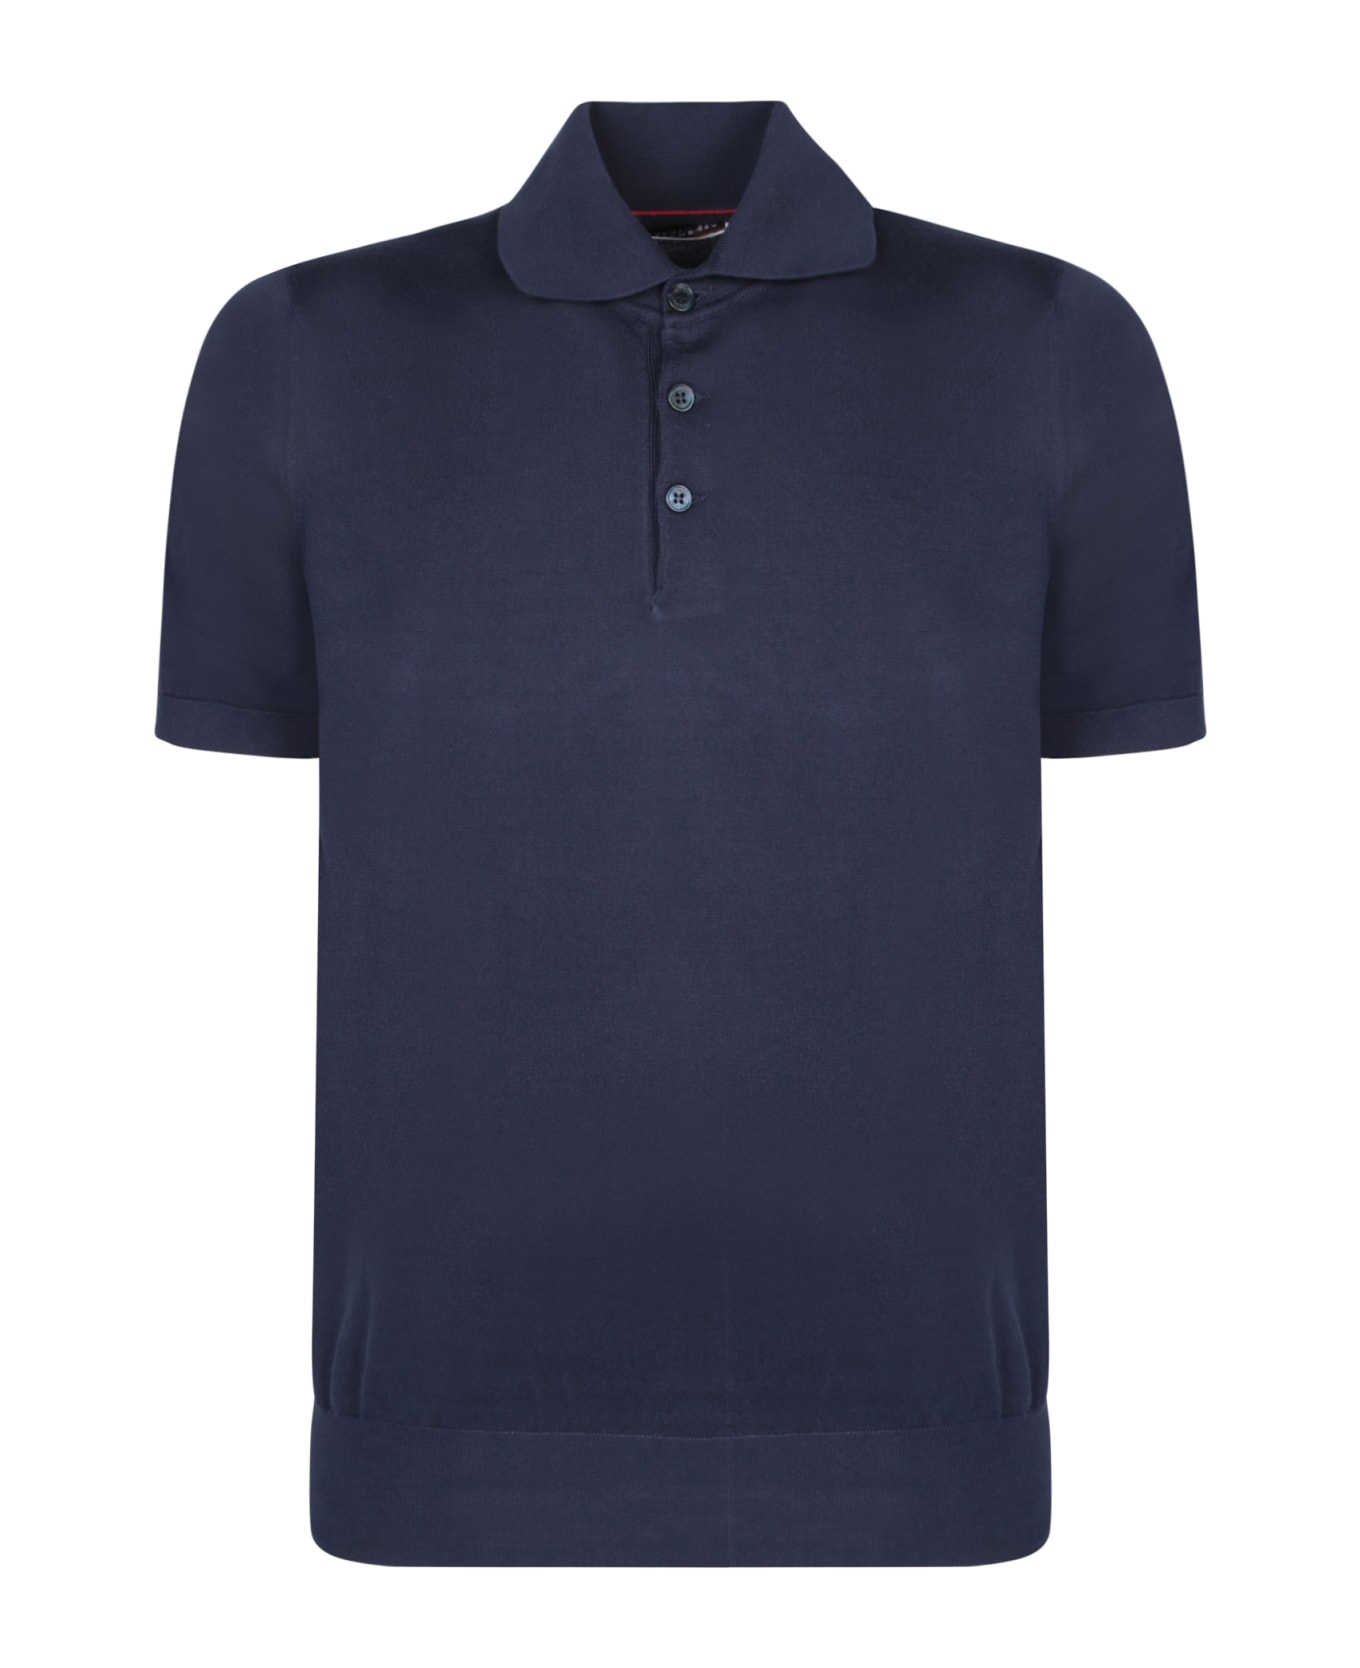 Brunello Cucinelli Short Sleeves Blue Polo Shirt - Navy